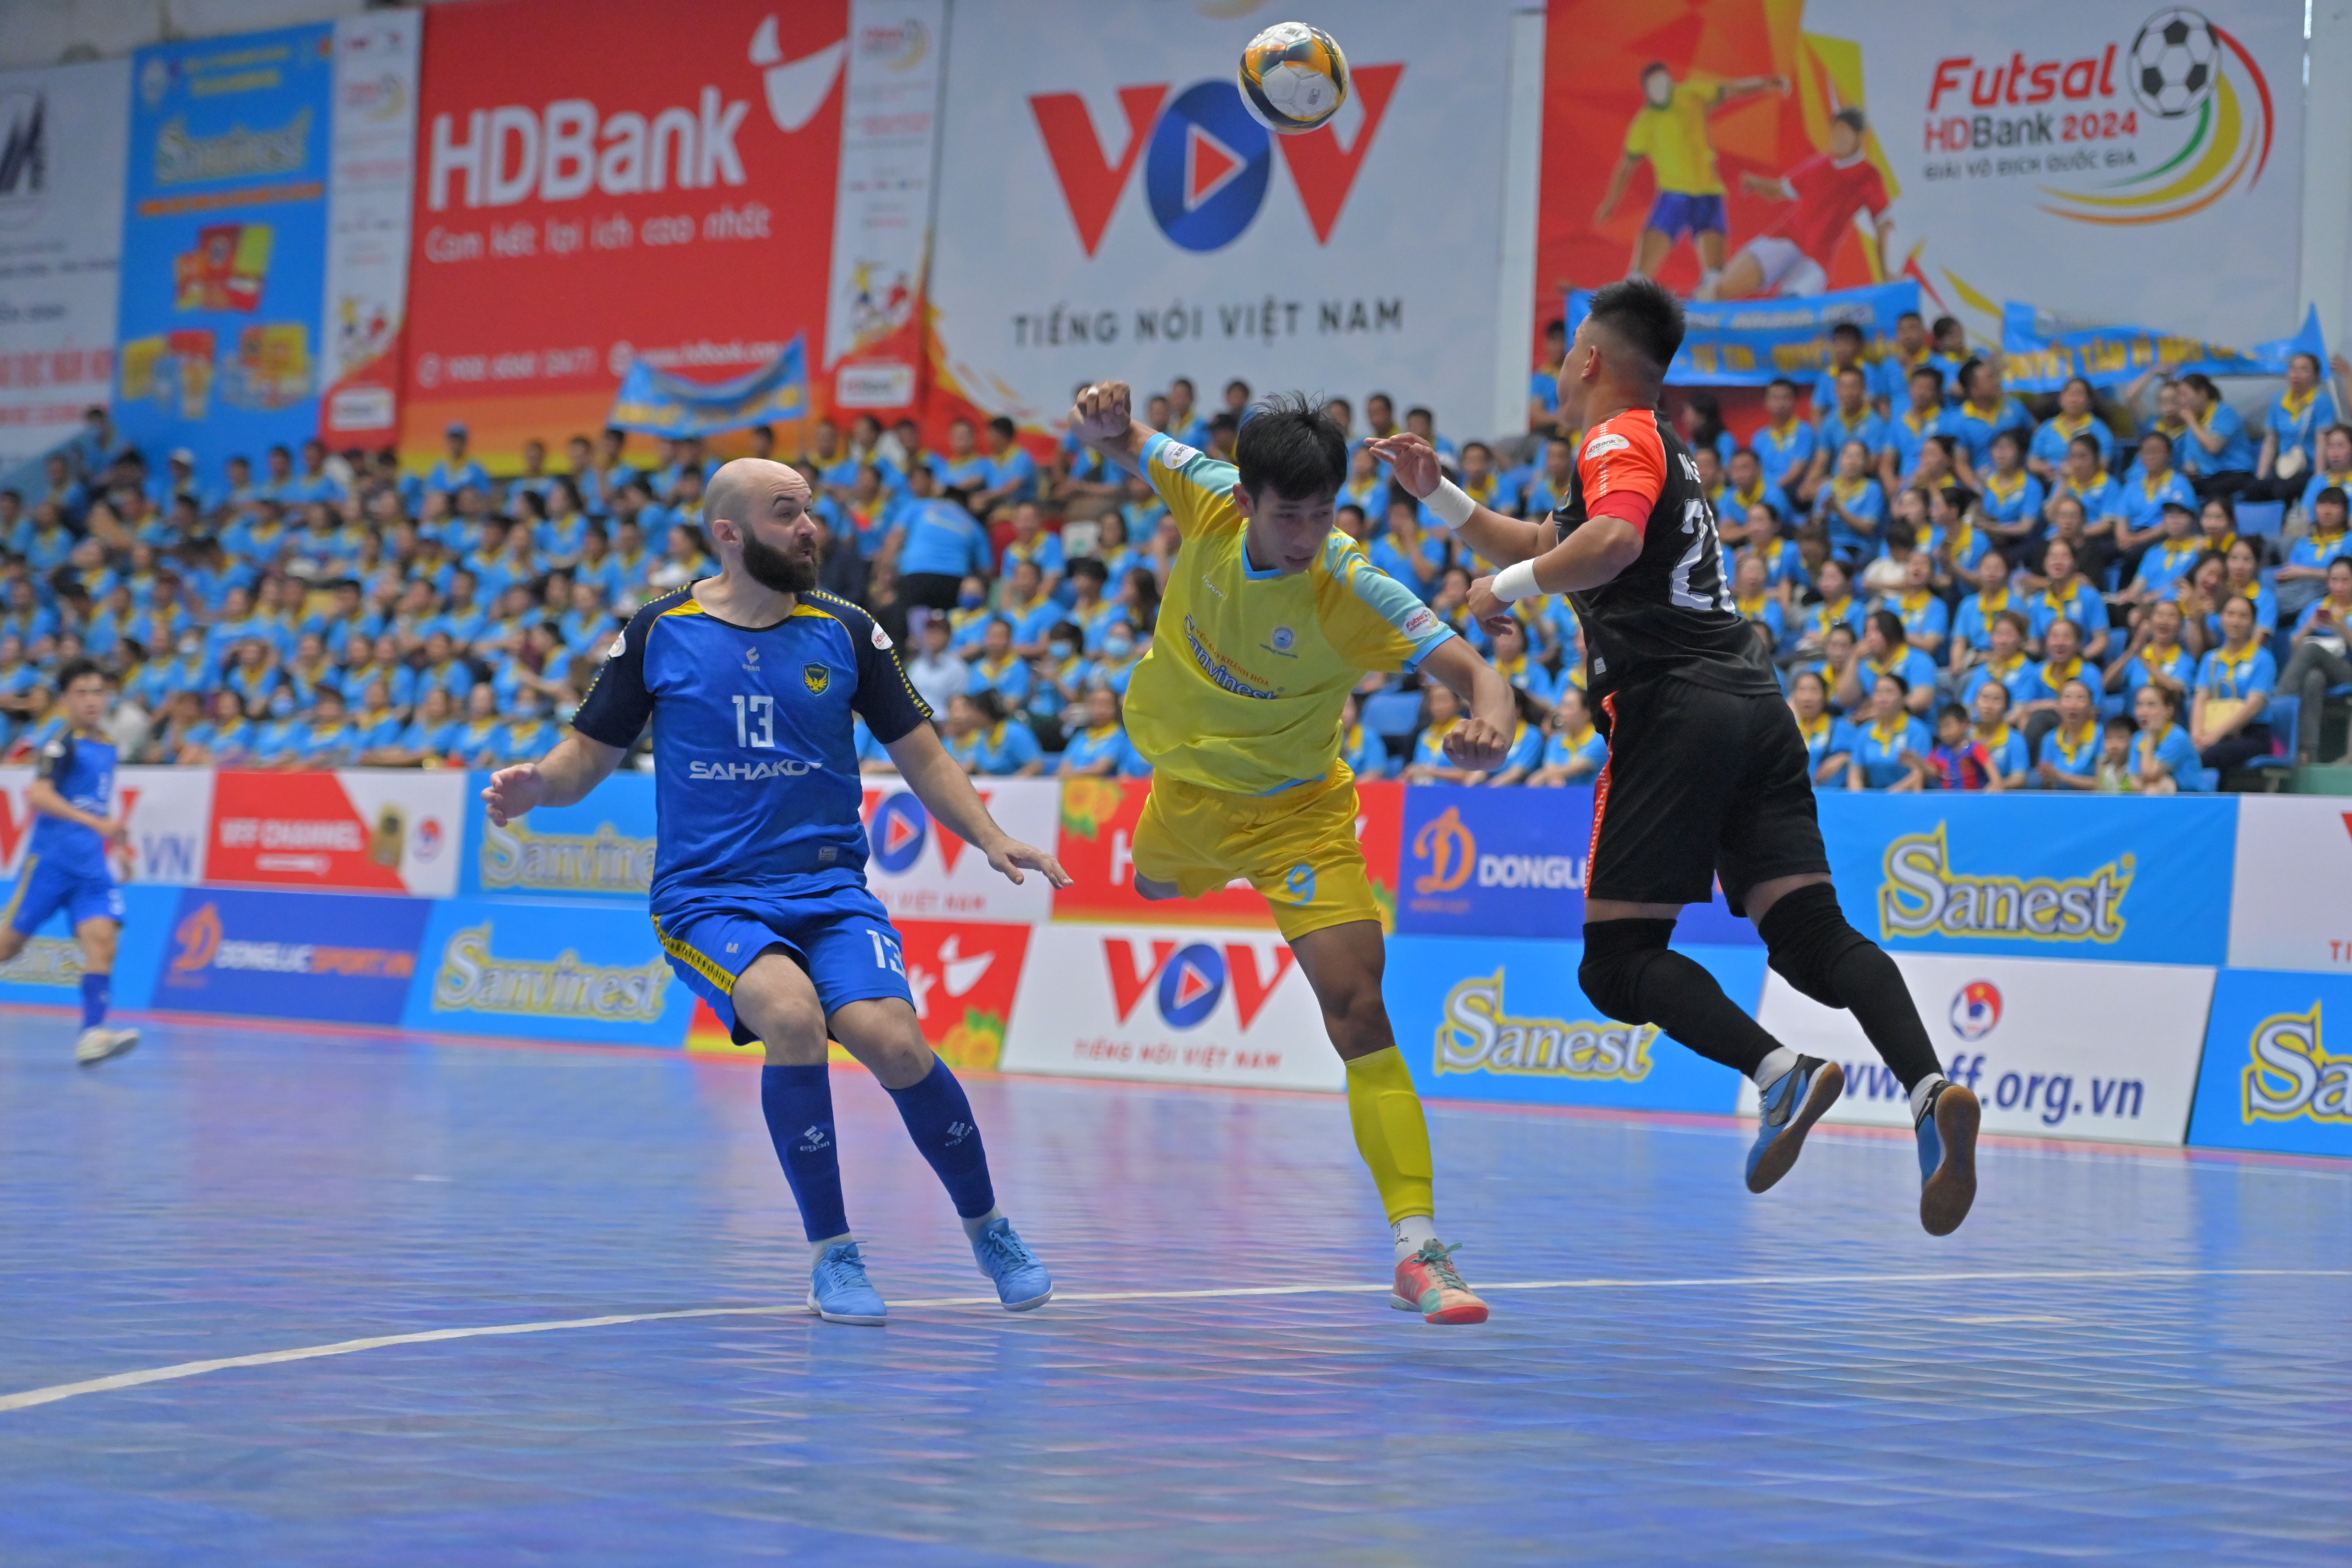 HDBank national futsal championship round 3:: Sanvinest Khanh Hoa aim for a win against Hanoi